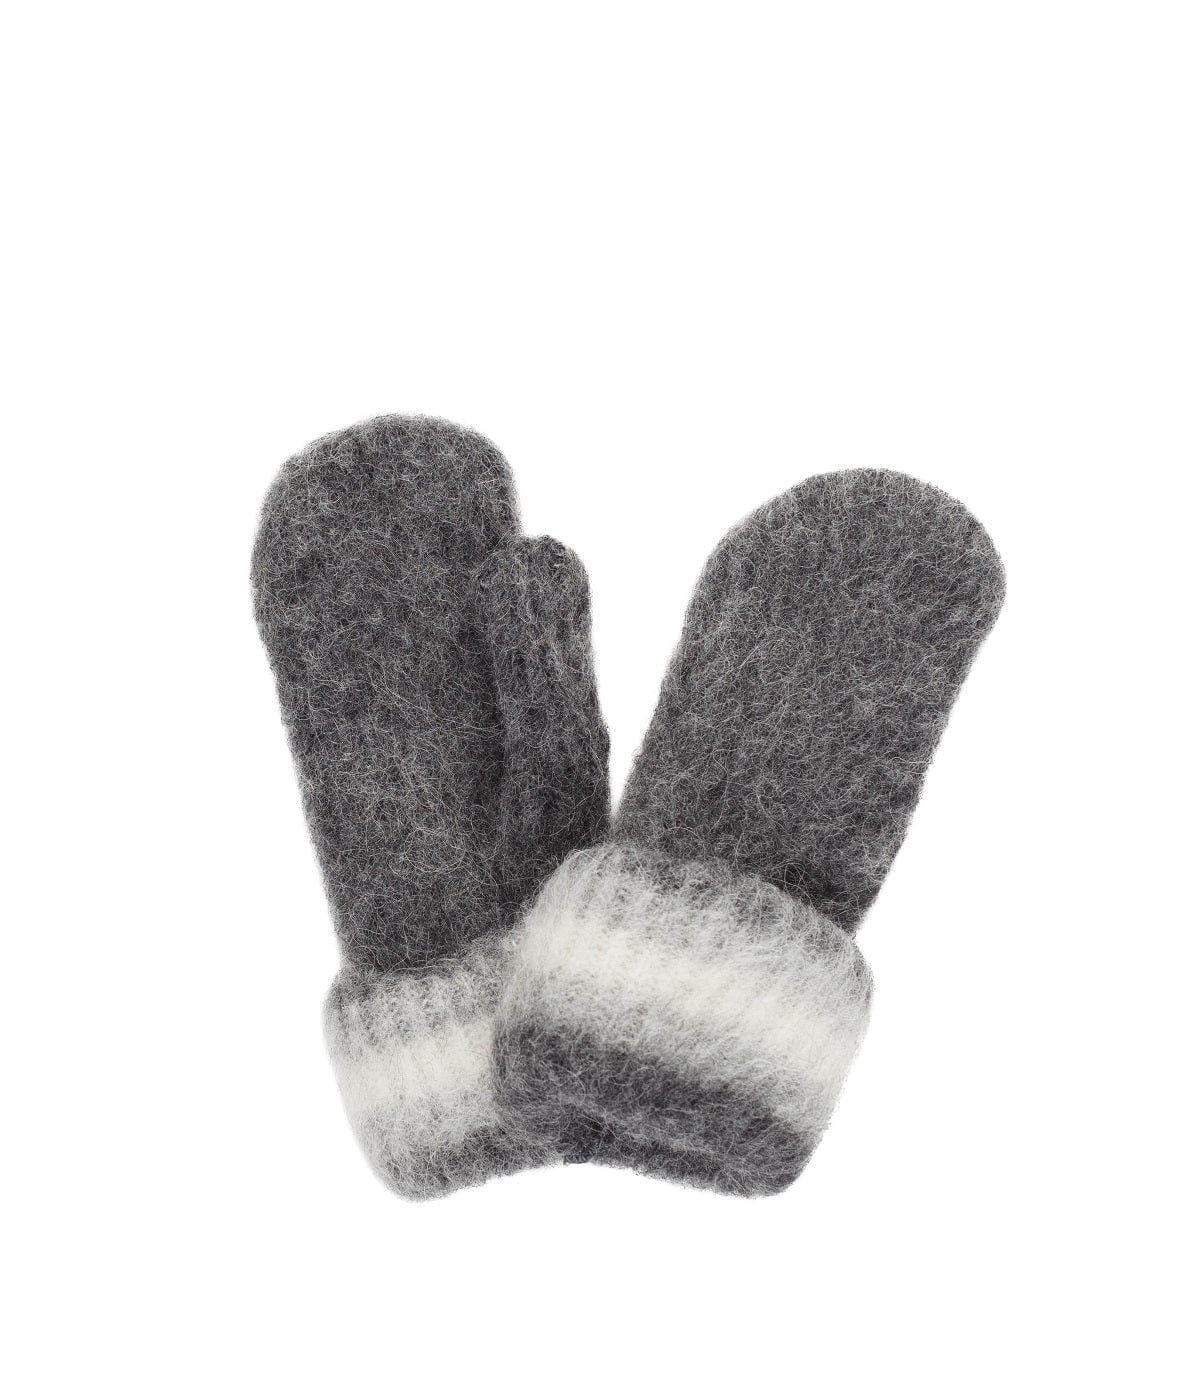 Brushed Wool Mittens - Dark Grey and White - The Icelandic Store